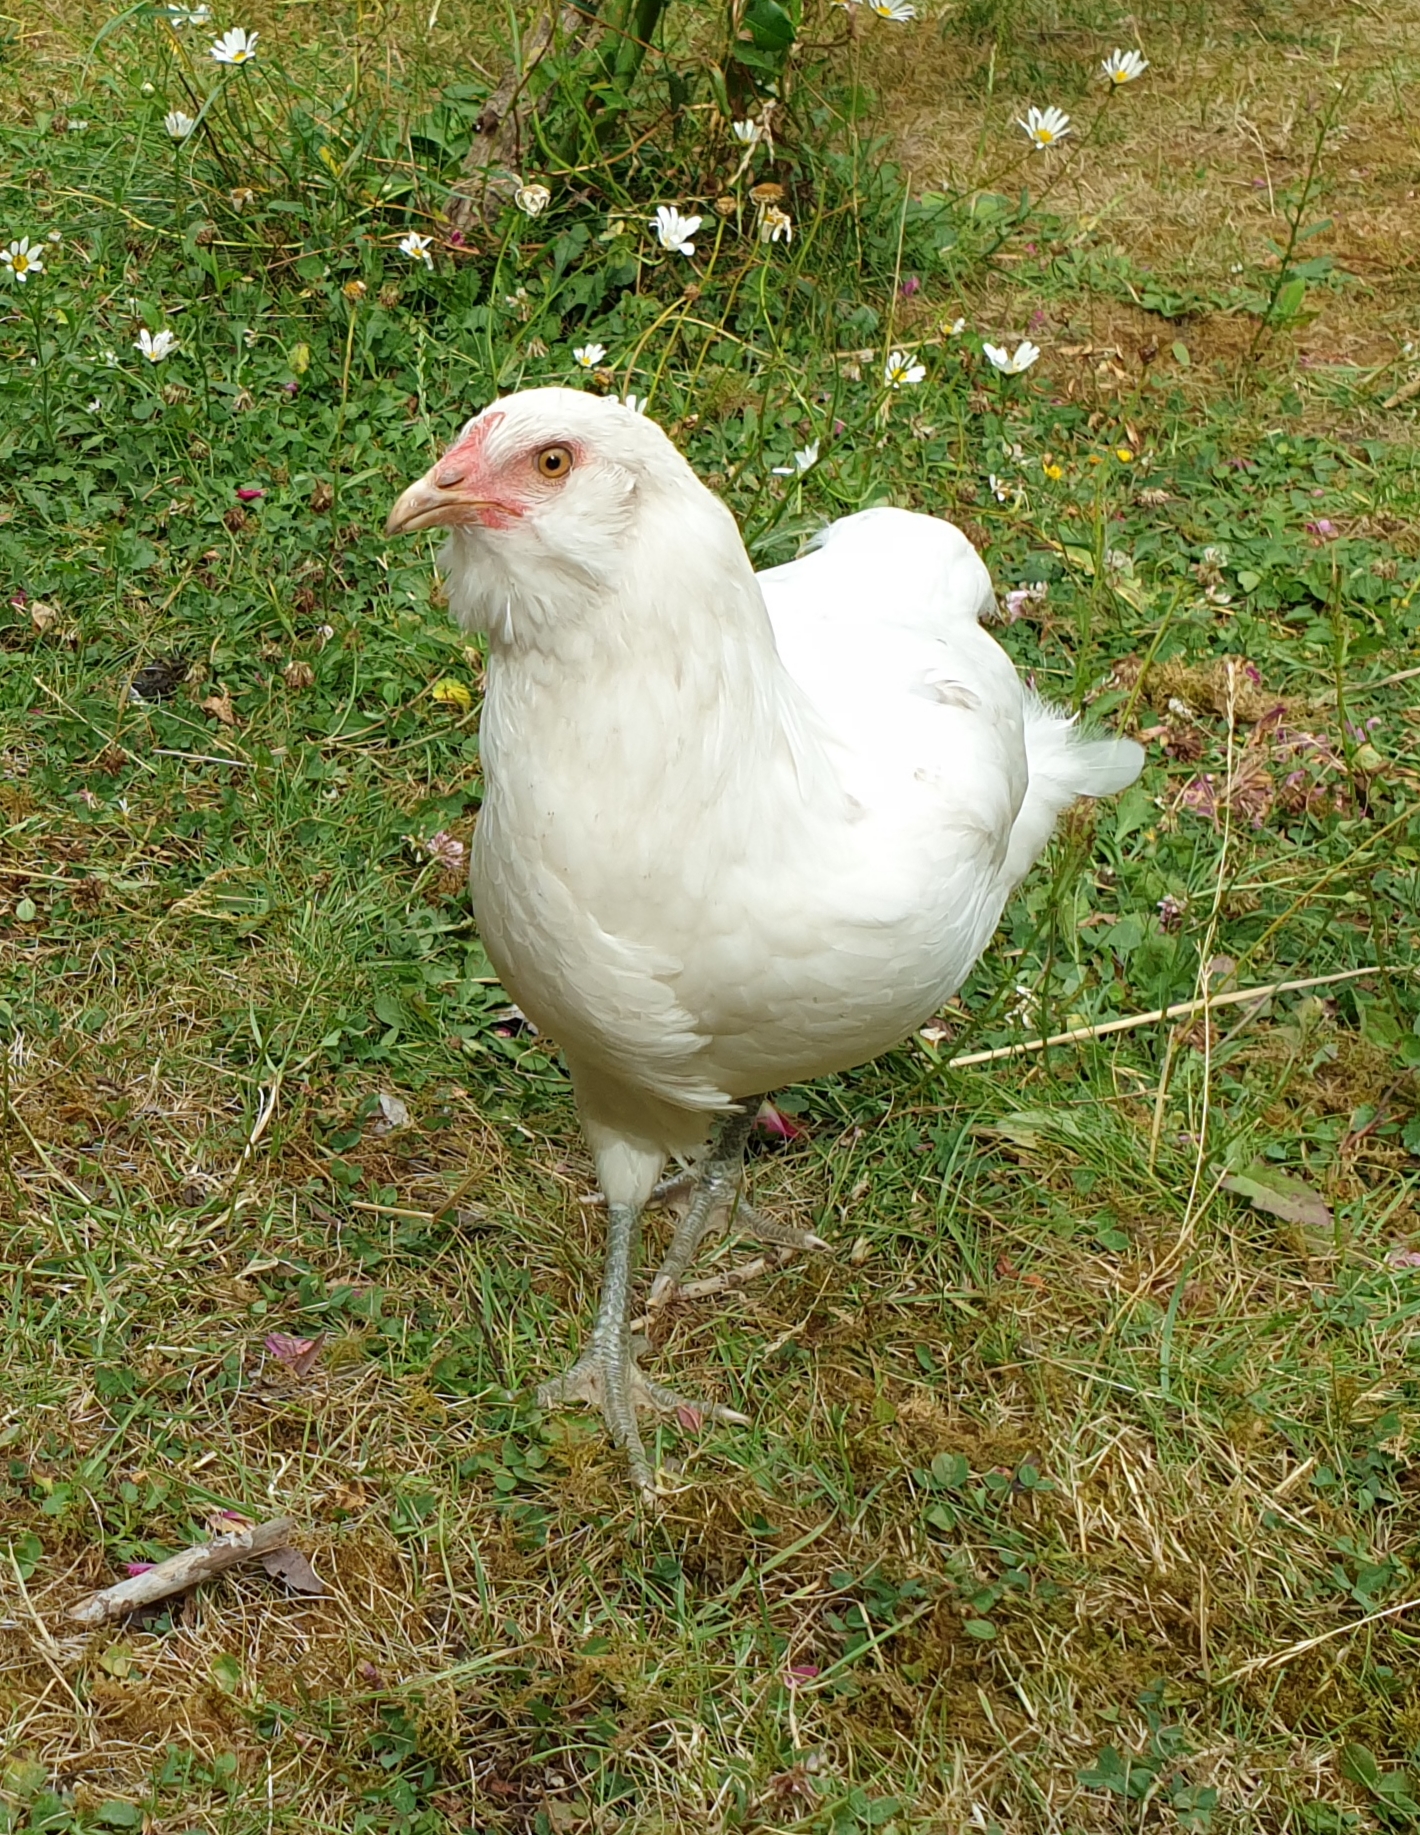 A white araucana chicken.